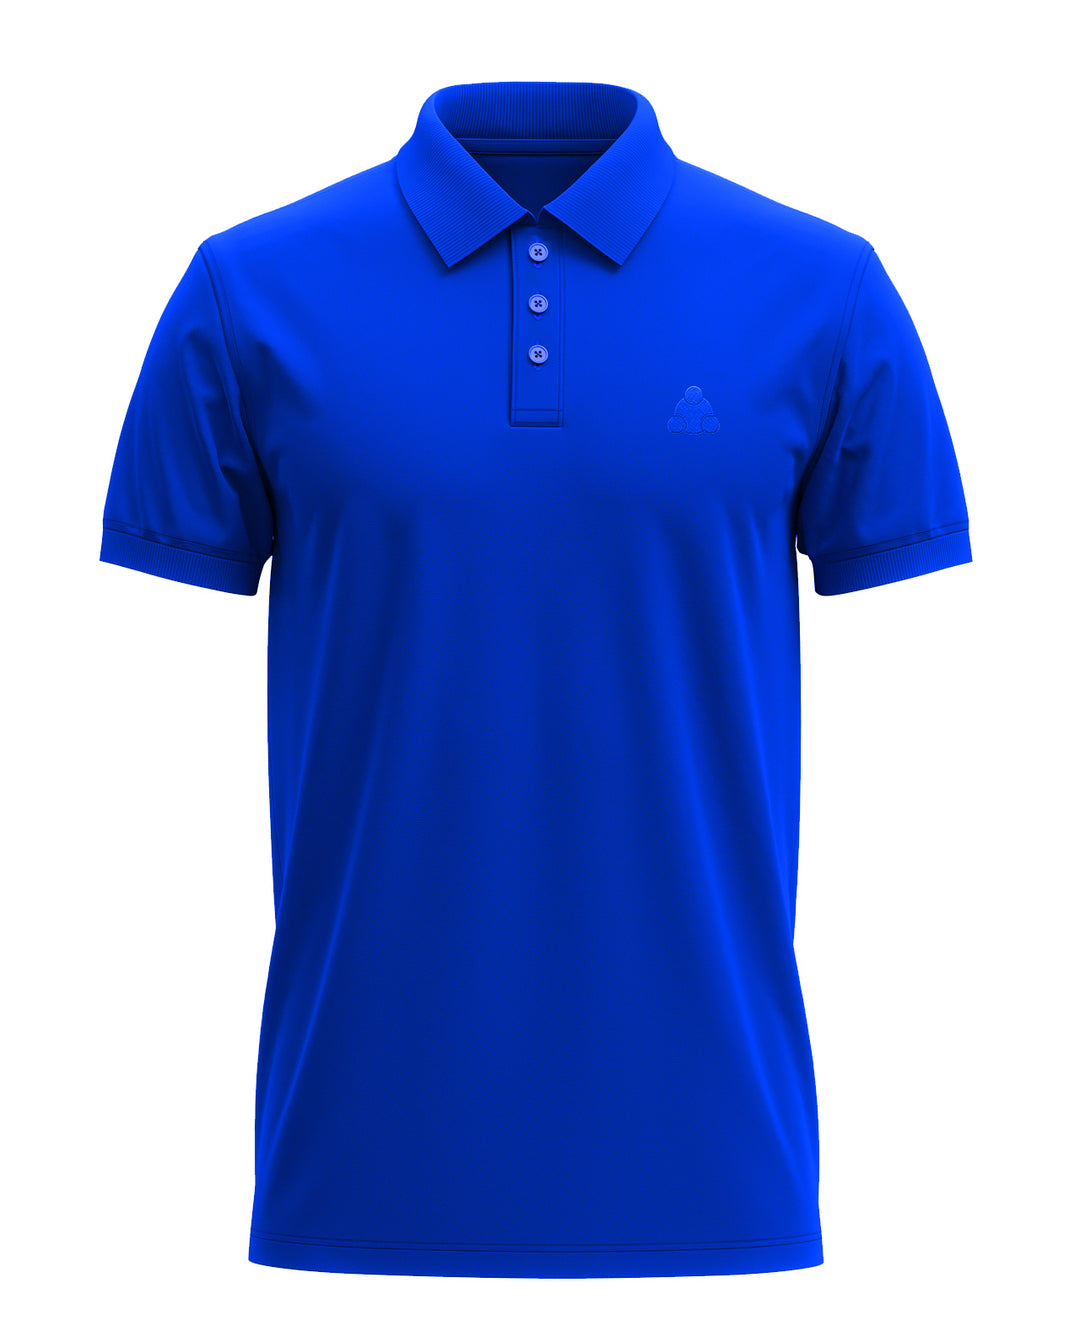 Trinizen Basics Polo T-shirt Embroidered Logo - Royal Blue